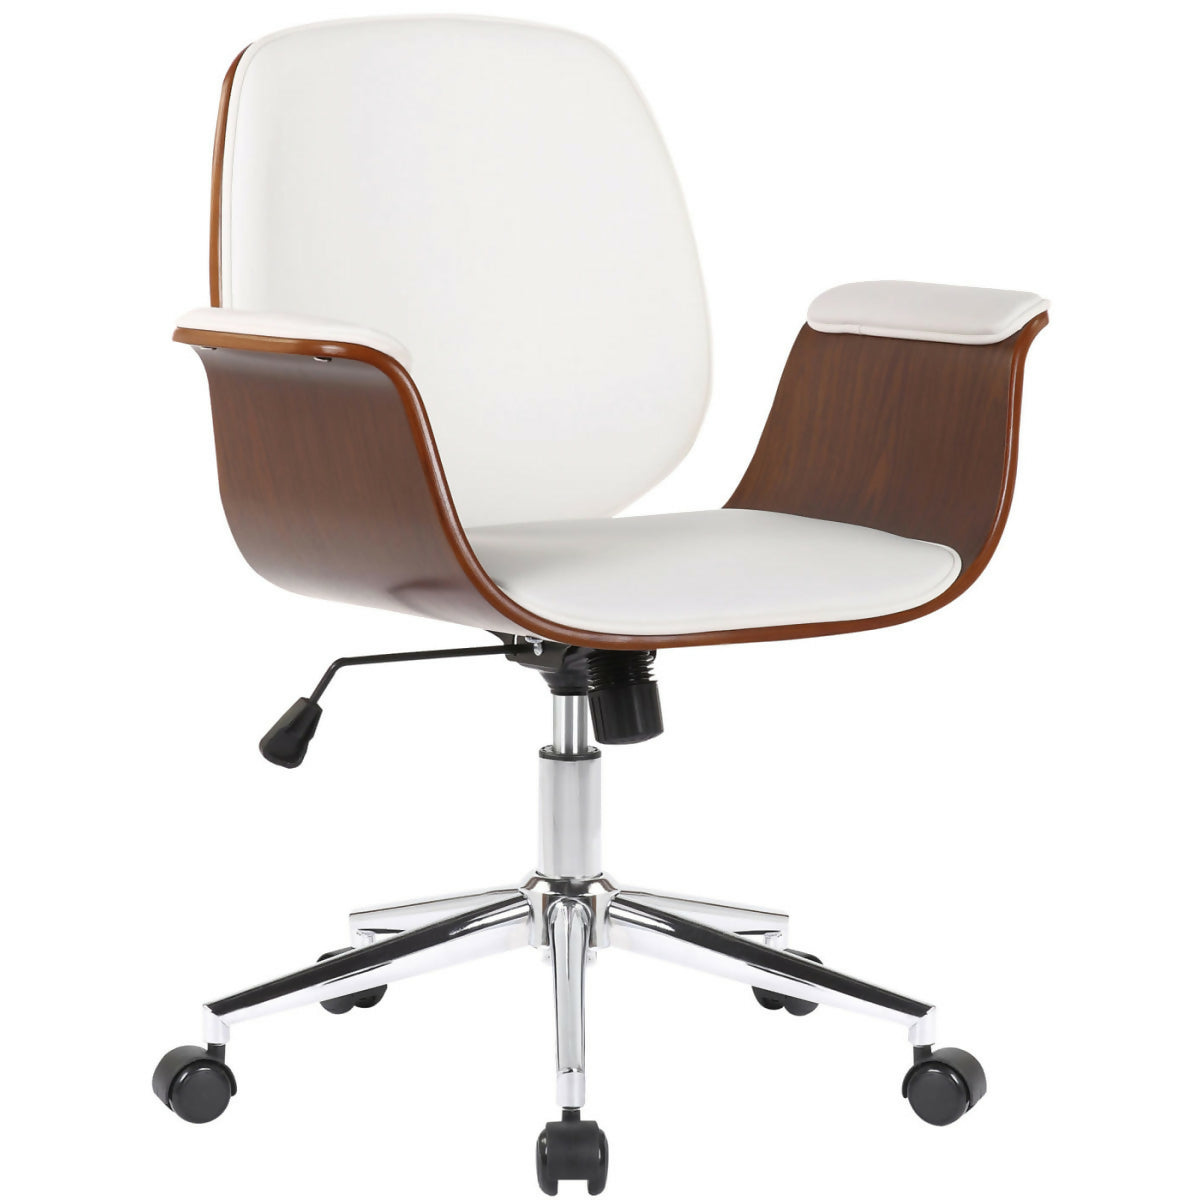 Kemberg office armchair - Walnut - White